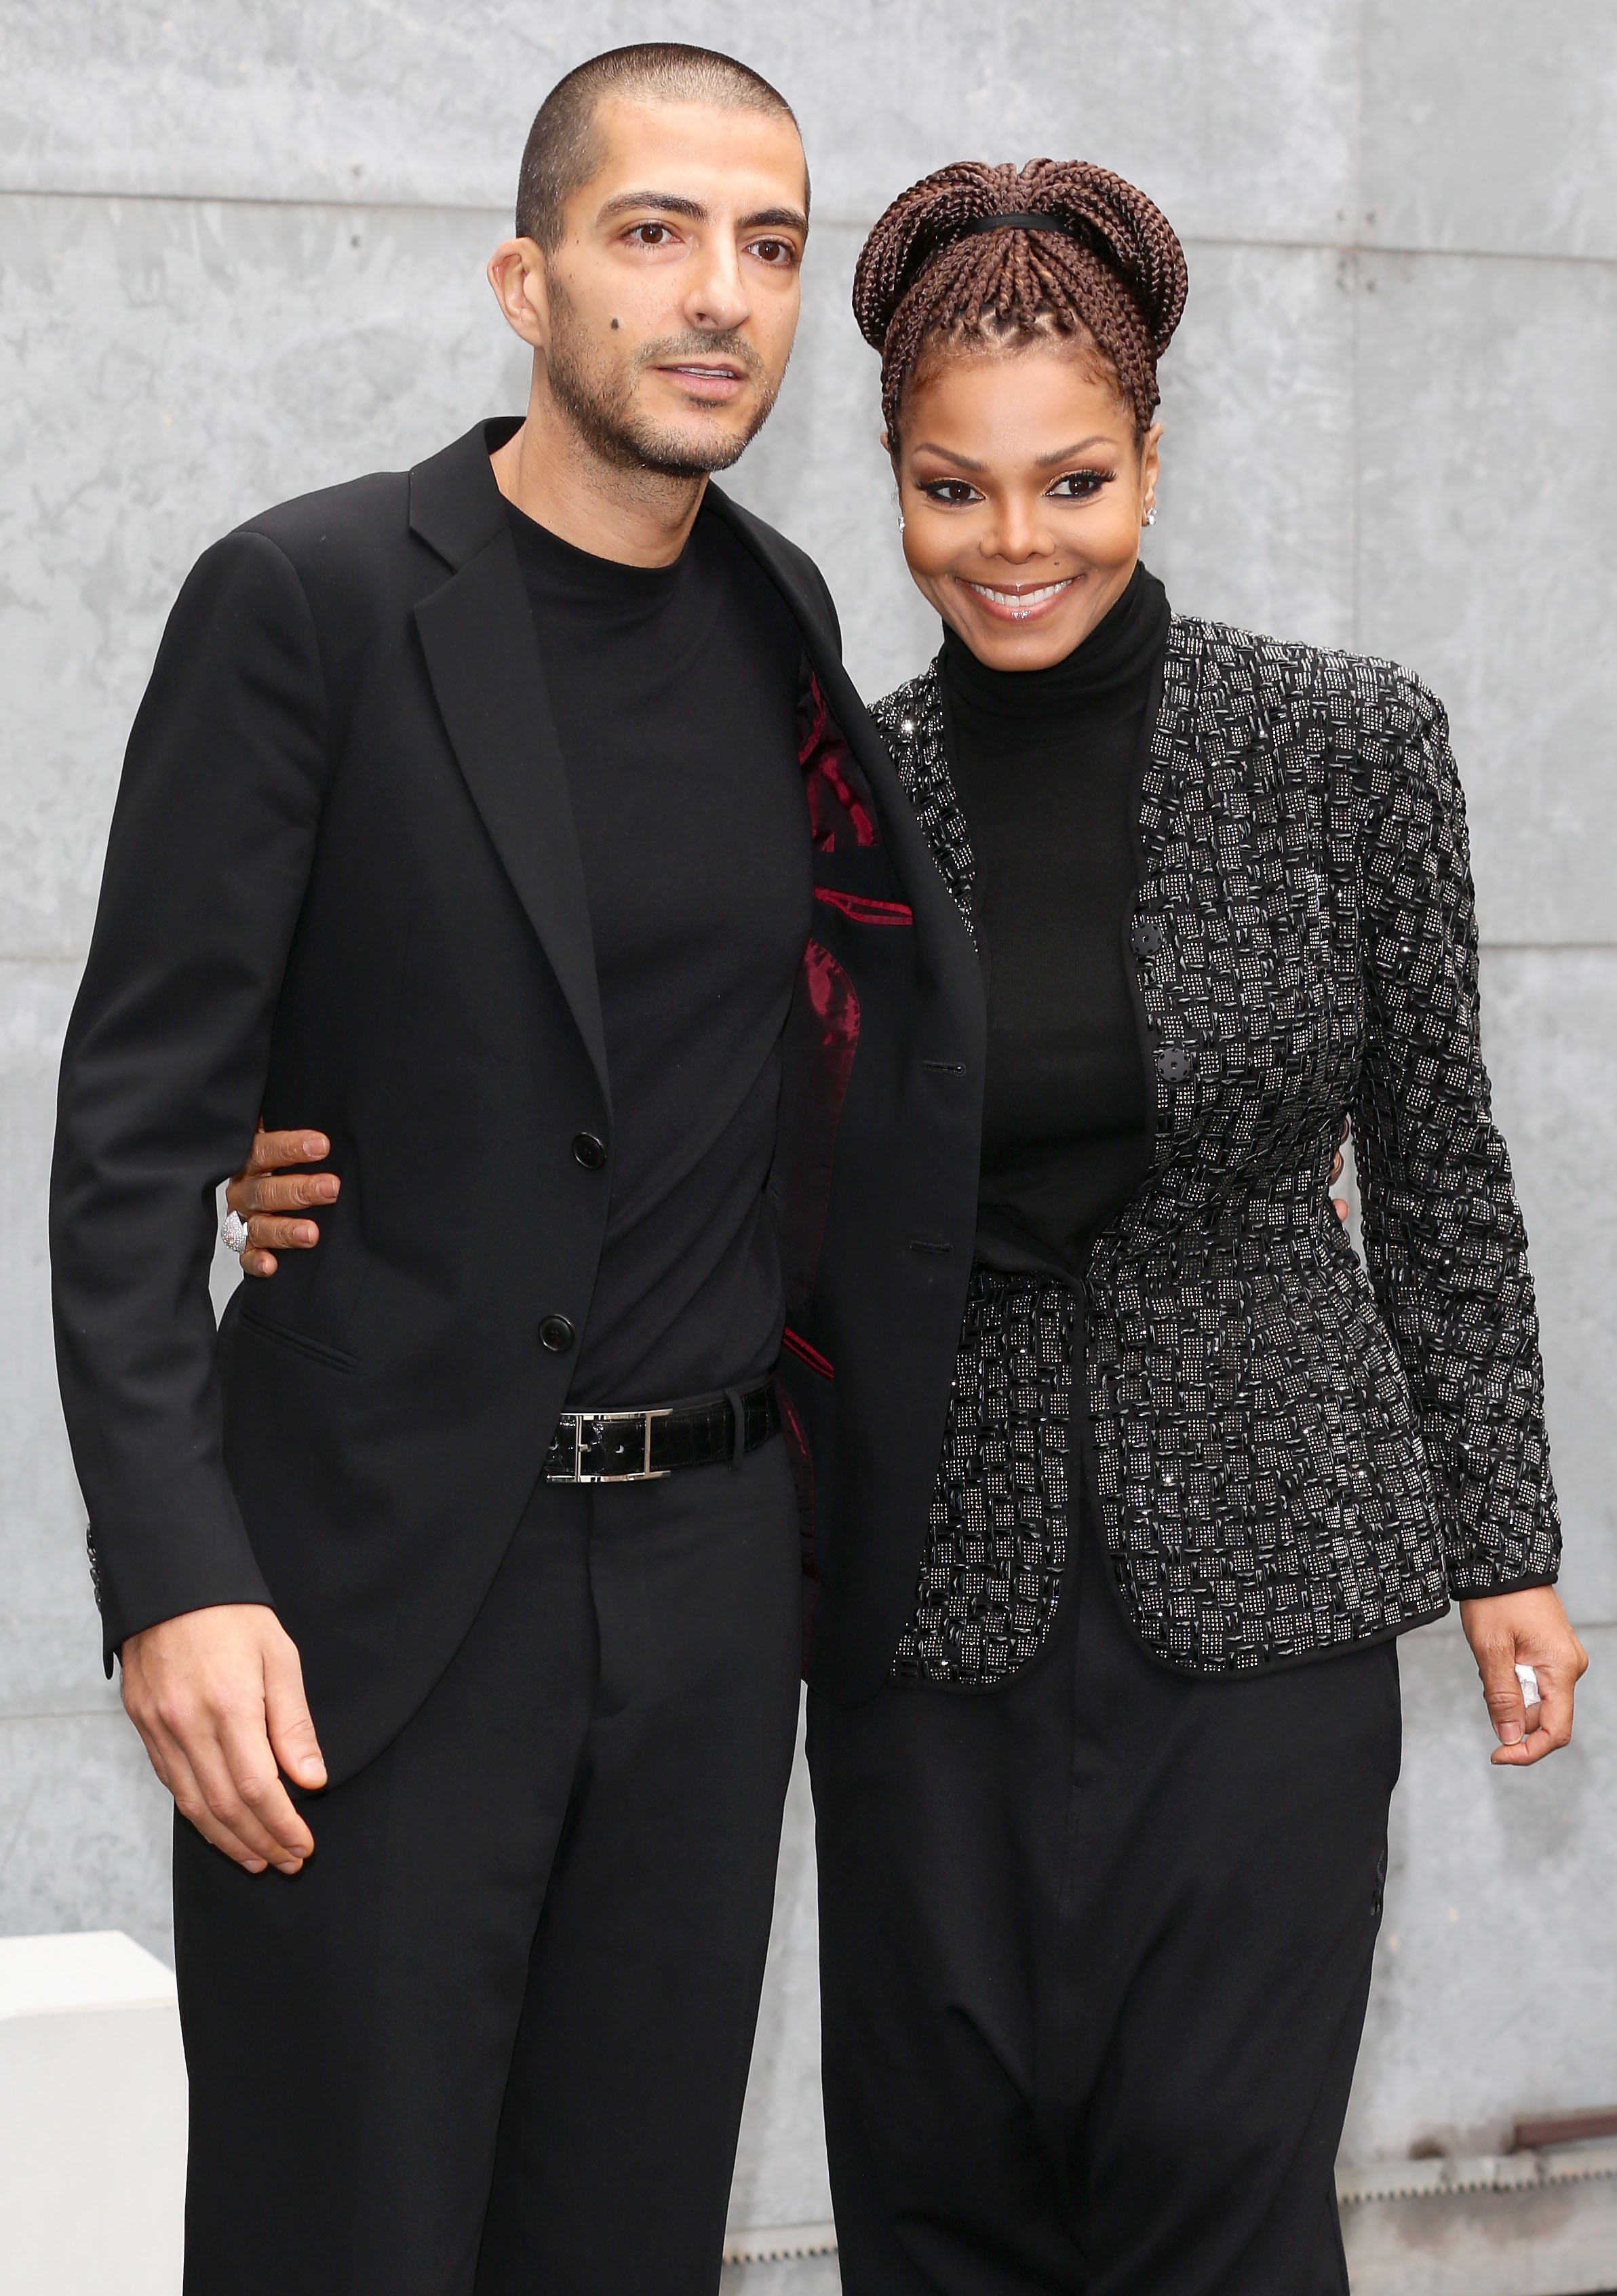 Wissam al Mana and Janet Jackson pose together at Giorgio Armani fashion show in 2013